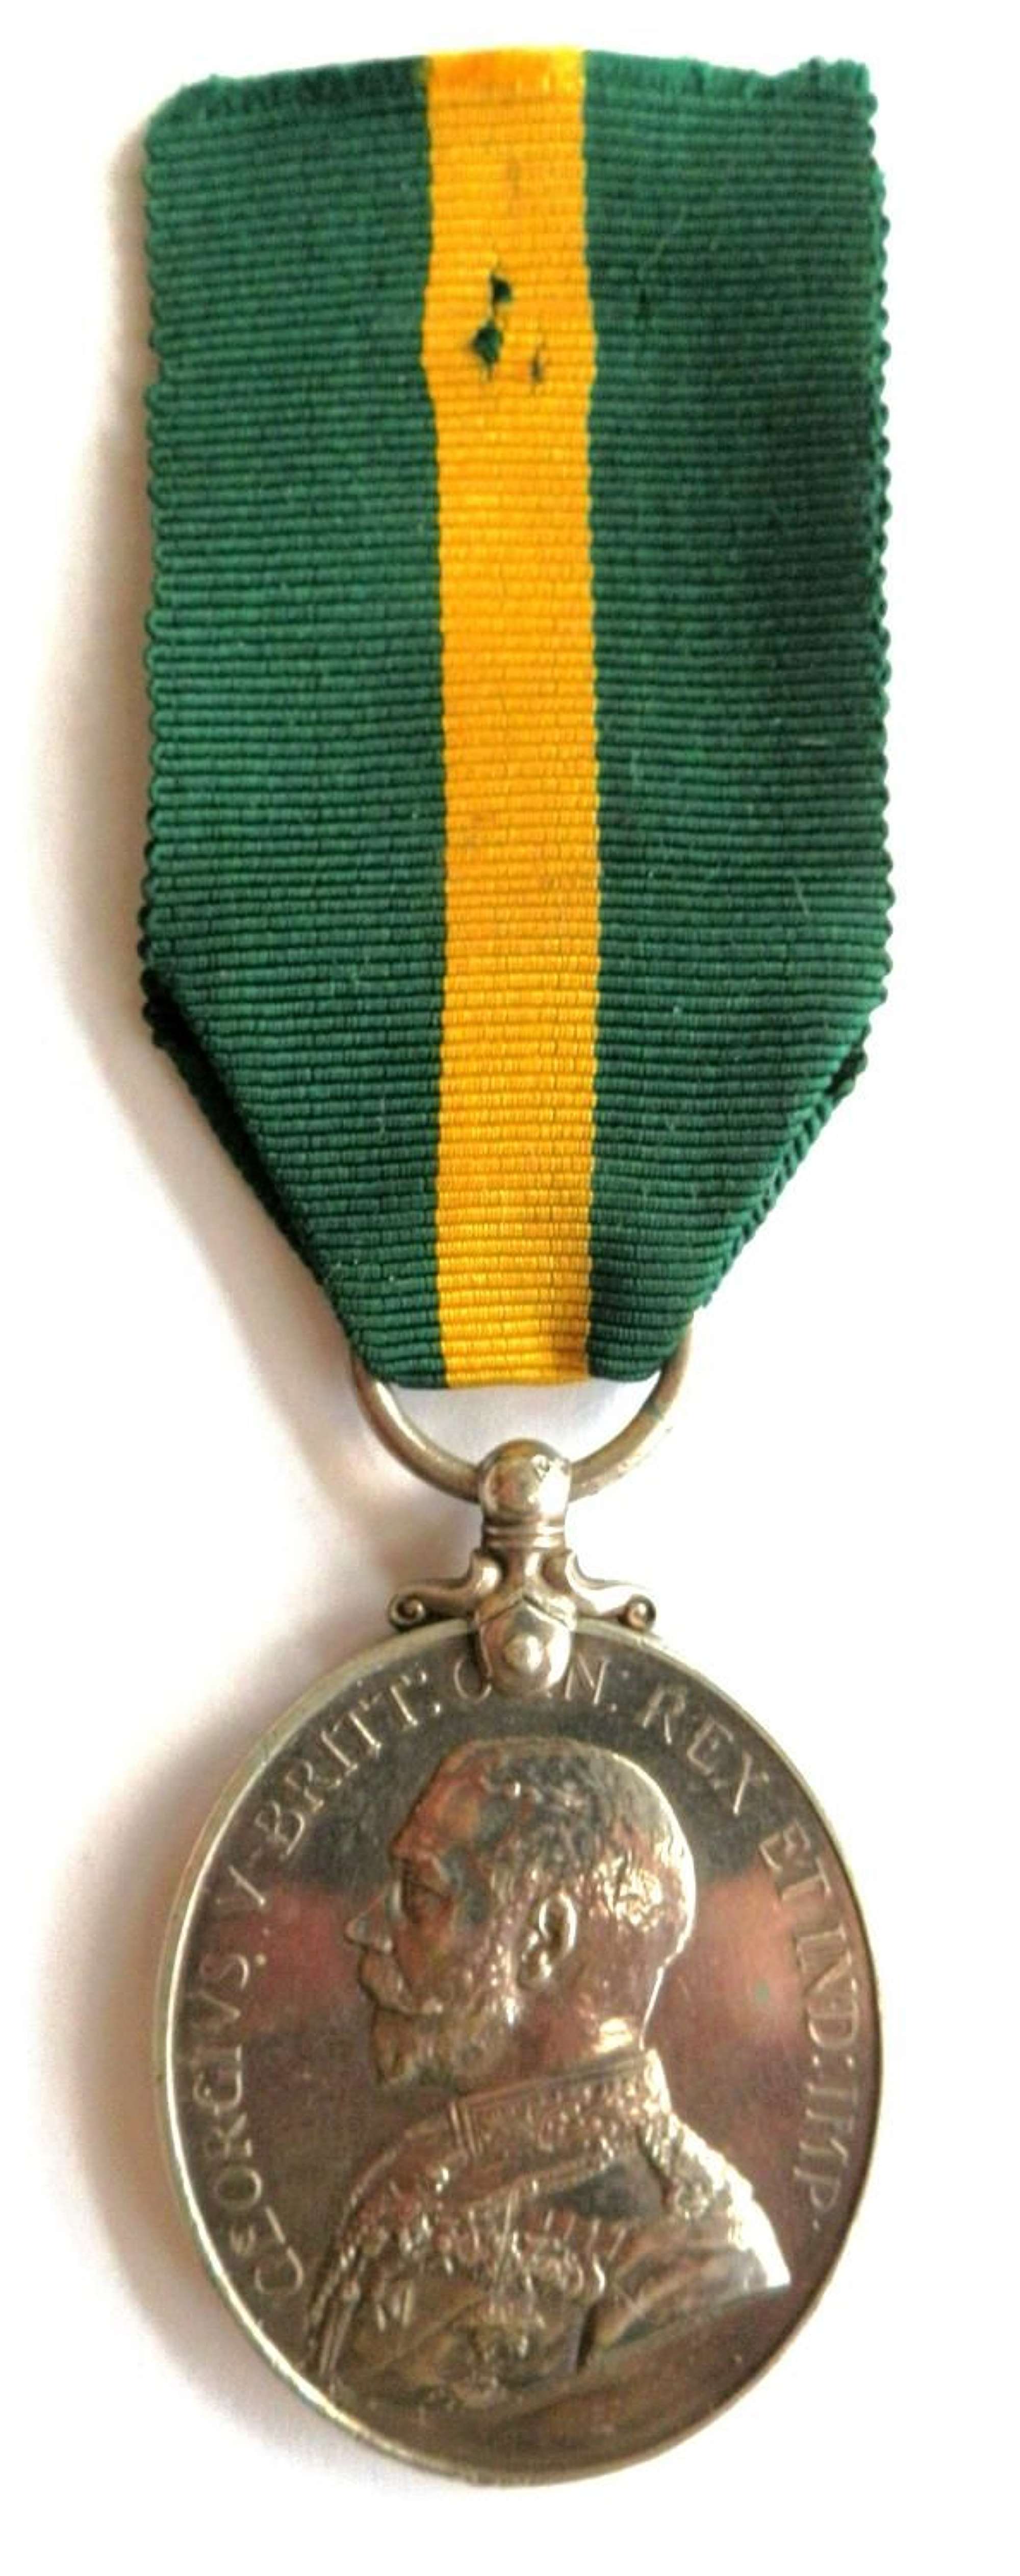 Territorial Force Efficiency Medal.1127 Pte G. G. Scott, 6/ Gloucester